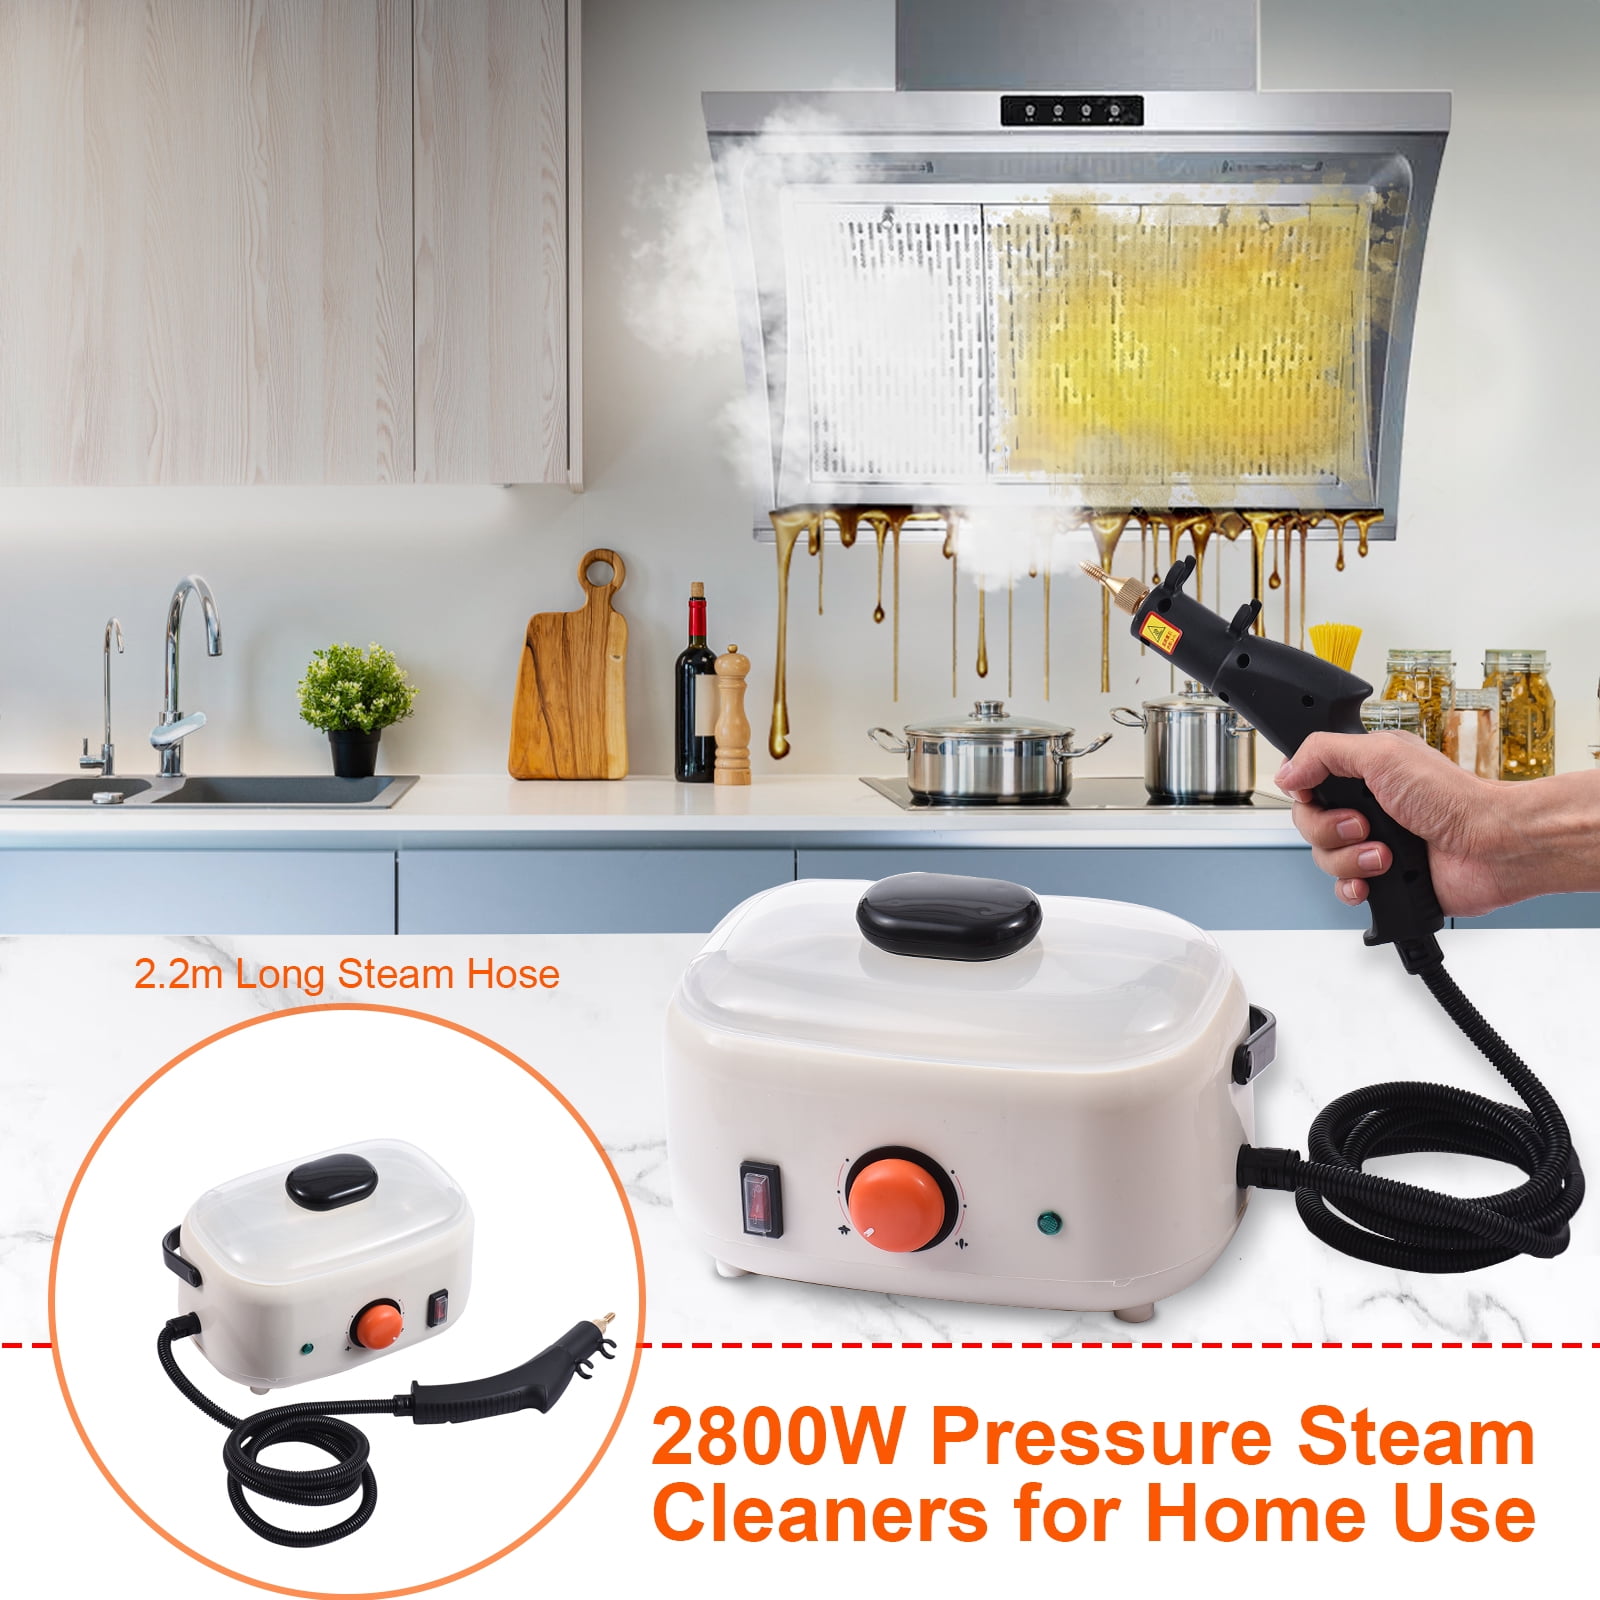 Portable Handheld Steam Cleaner, 2500W High Temperature Pressurized Steam Machine for Car Detailing Tiles Floor Cleaning Steamer, Orange, Size: 221 in